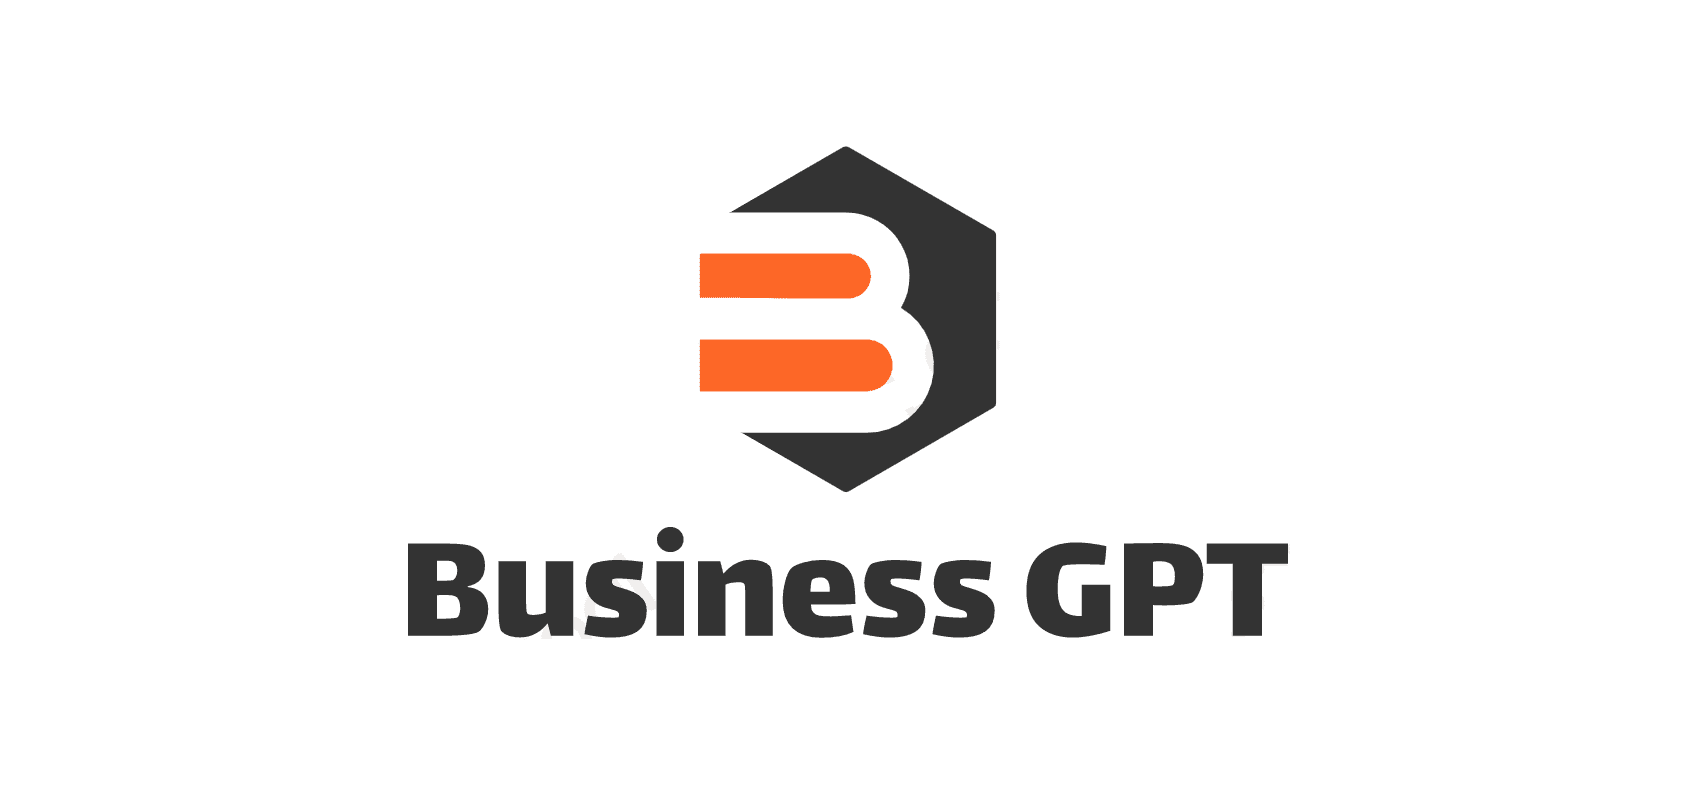 Business GPT